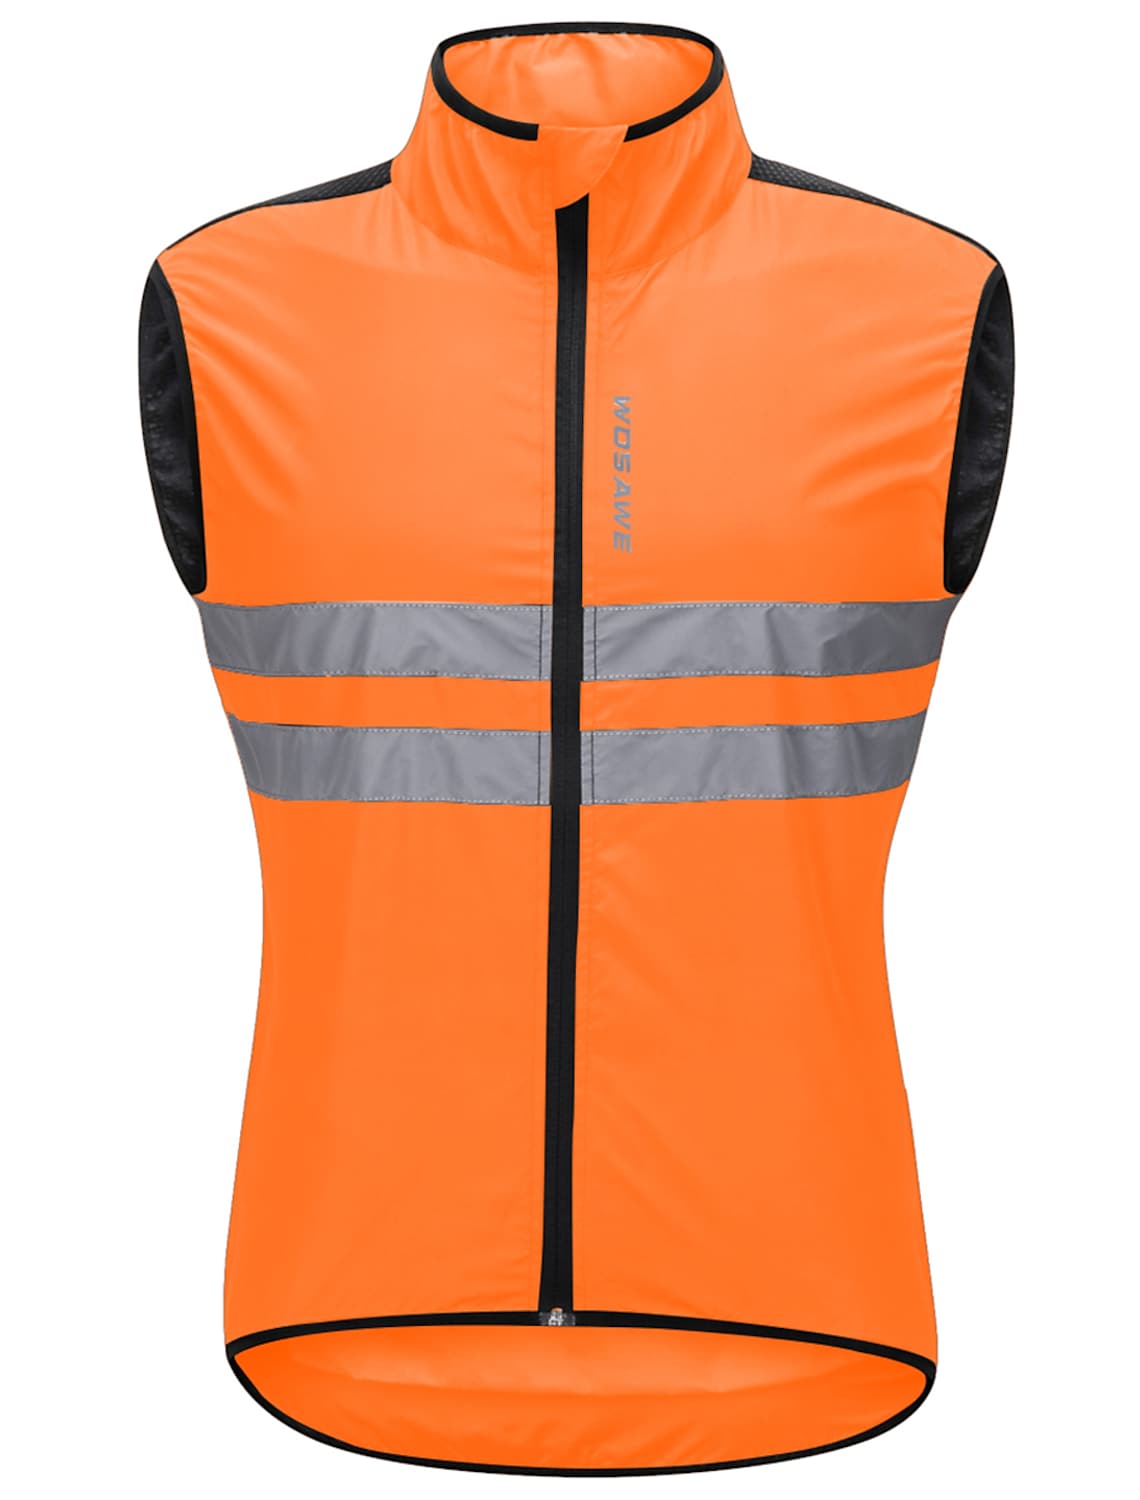 Men's Sleeveless Cycling Vest